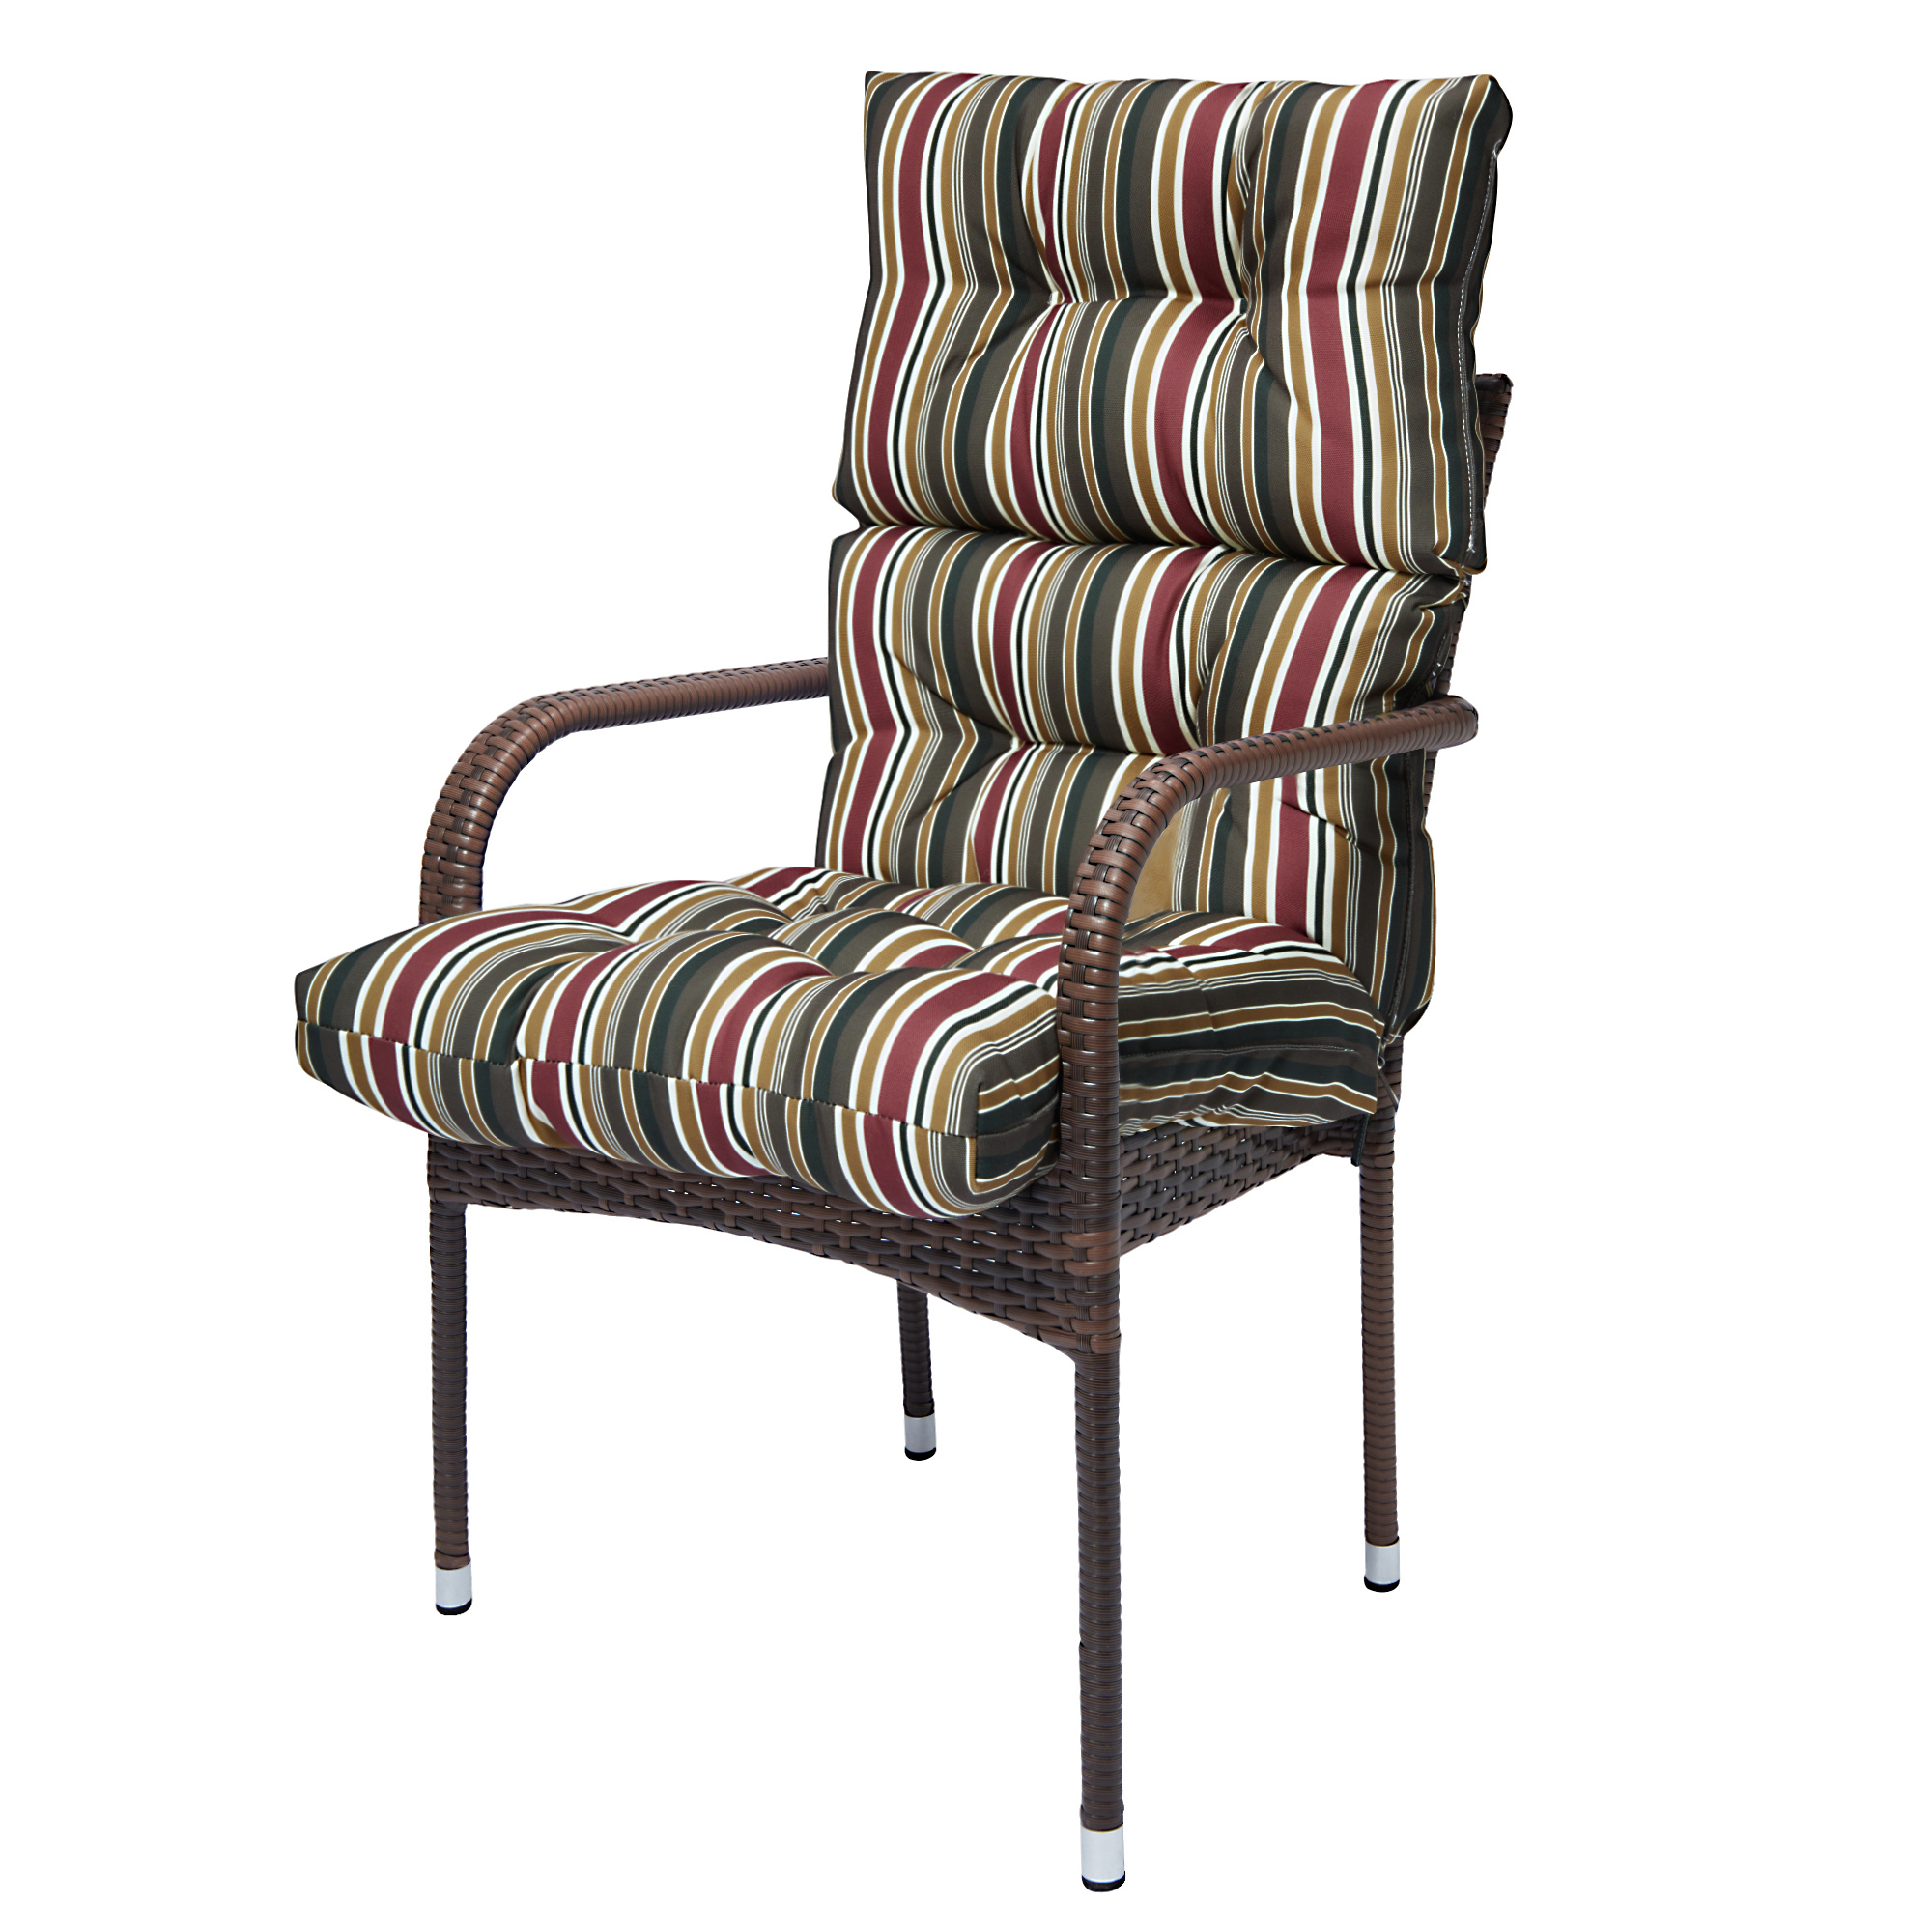 44x21 inch Outdoor Chair Cushion, 2/4pcs High Back Chair Cushions Patio Garden High Rebound Foam Chair Cushion Waterproof Polyester Seat Cushions or Home Patio Garden Decor - image 4 of 6